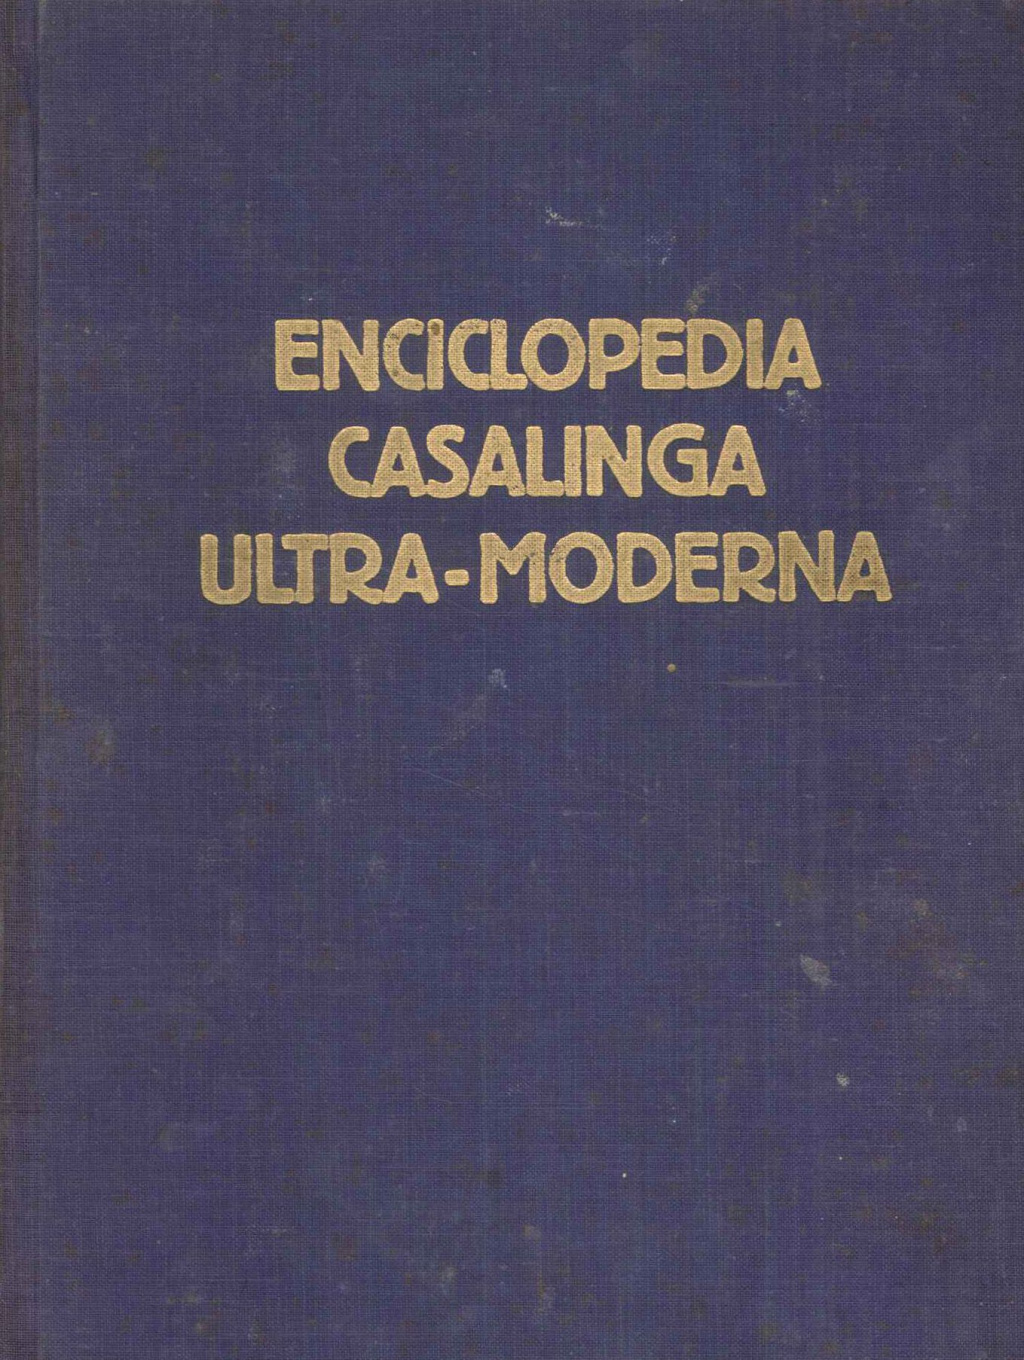 Enciclopedia casalinga ultra-moderna